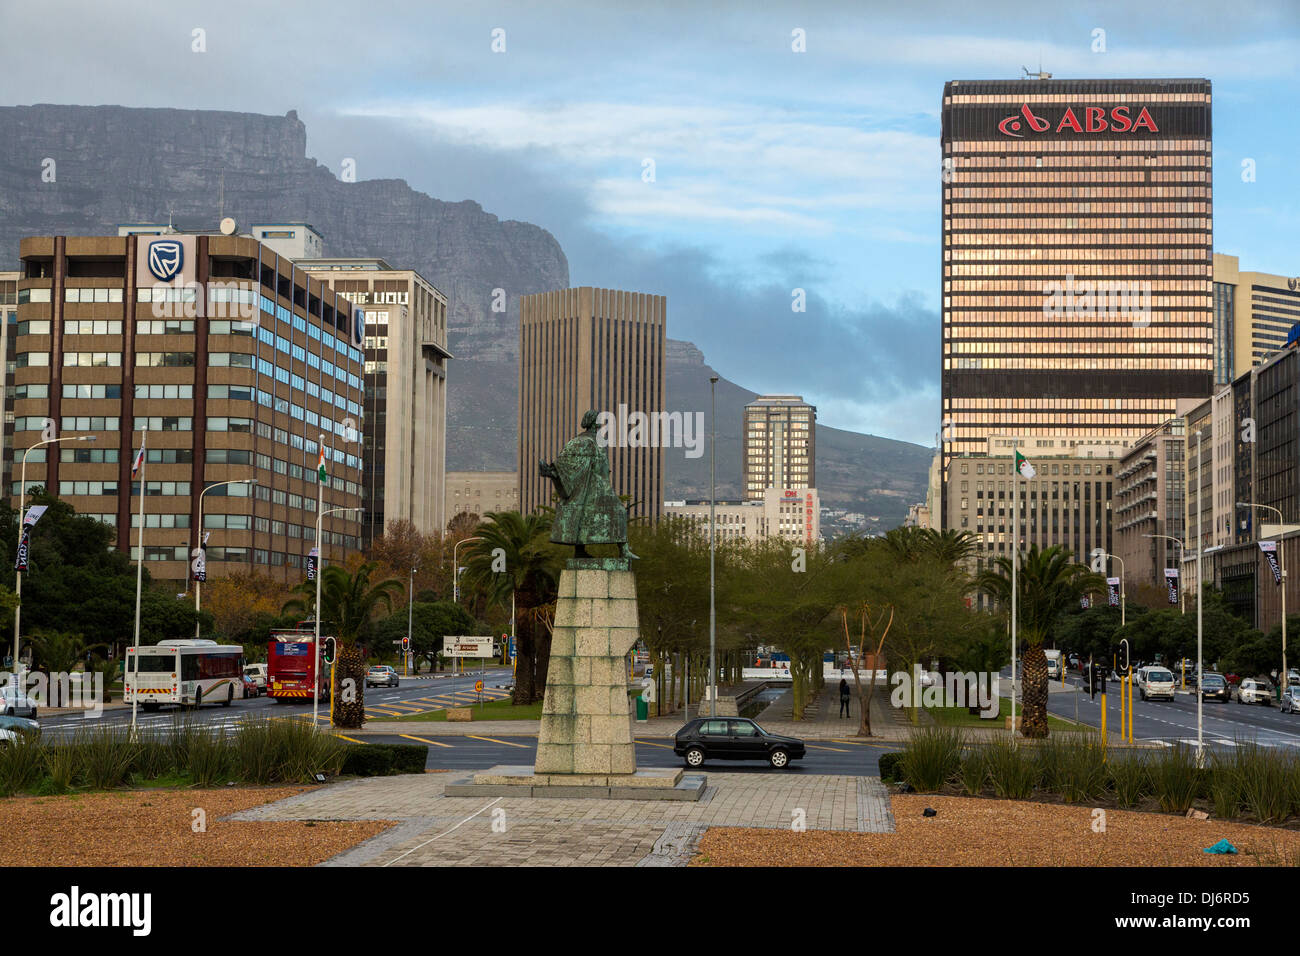 Sud Africa, Cape Town. Statua di Bartolomeo Diaz nel cerchio di traffico. Adderley Street in background. Foto Stock